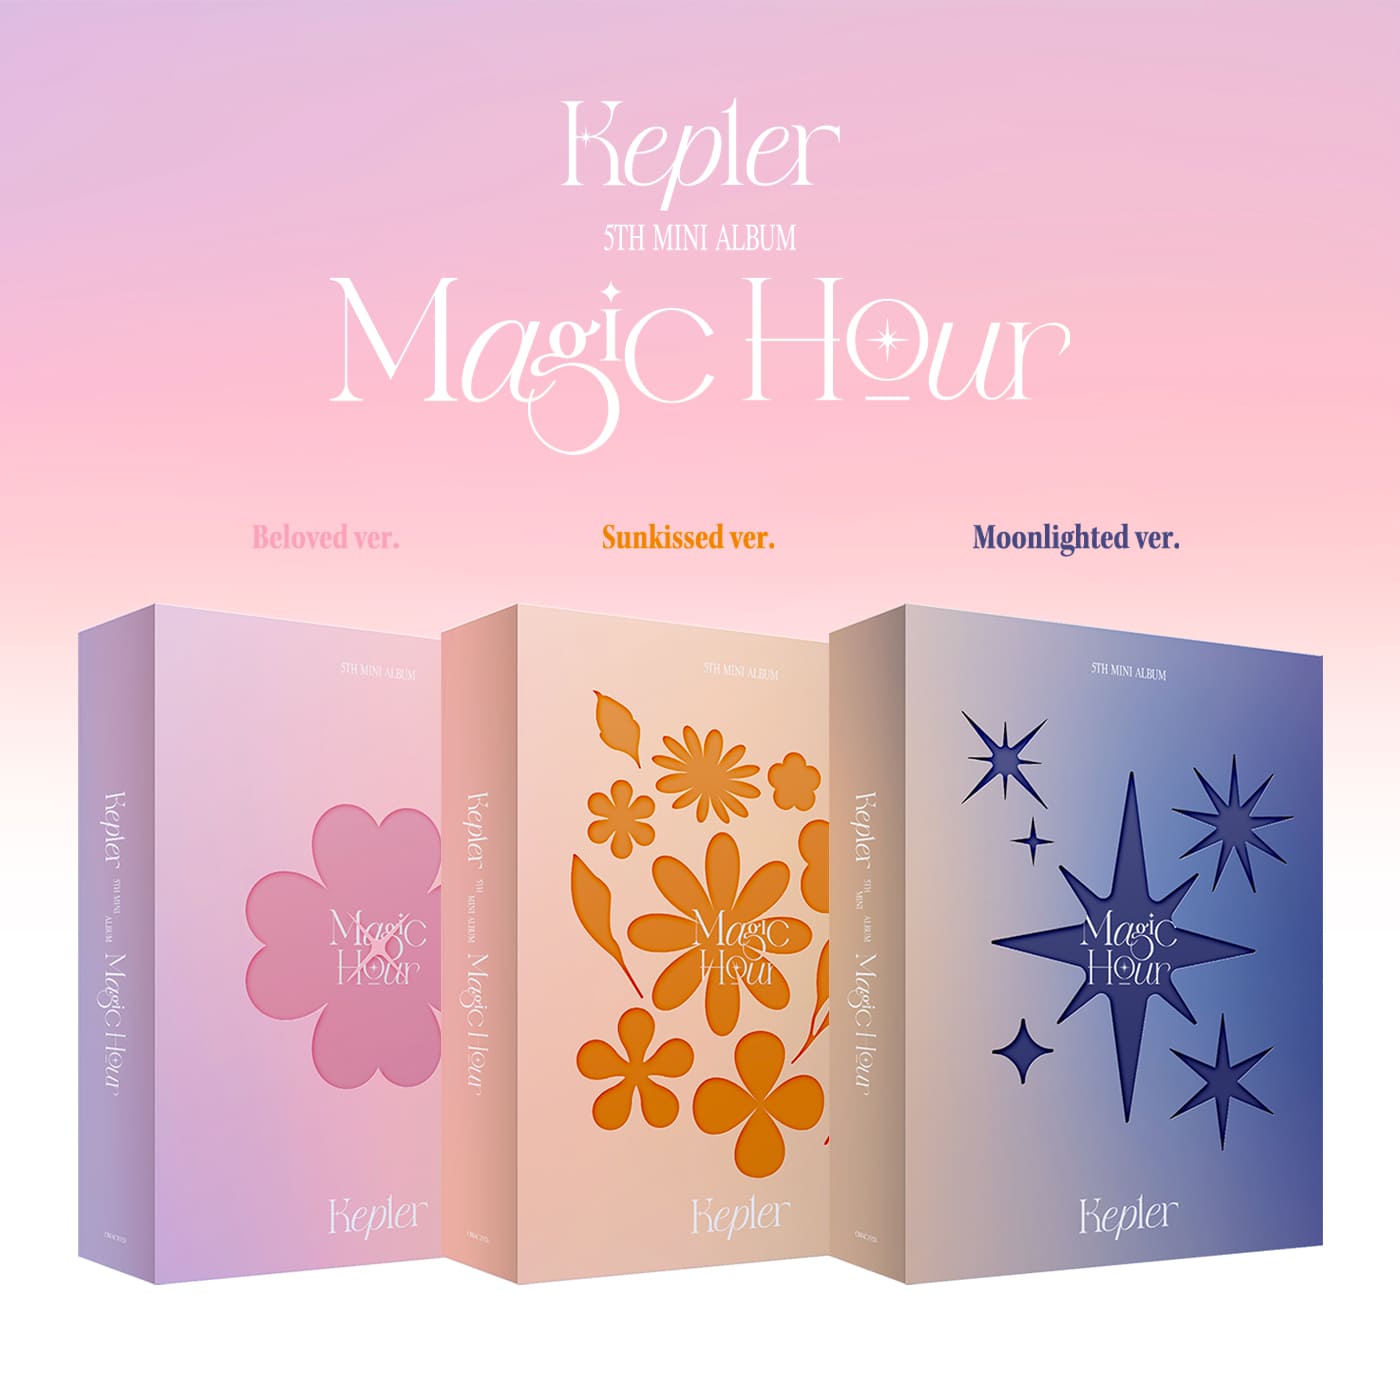 Kep1er 5th Mini Album Magic Hour